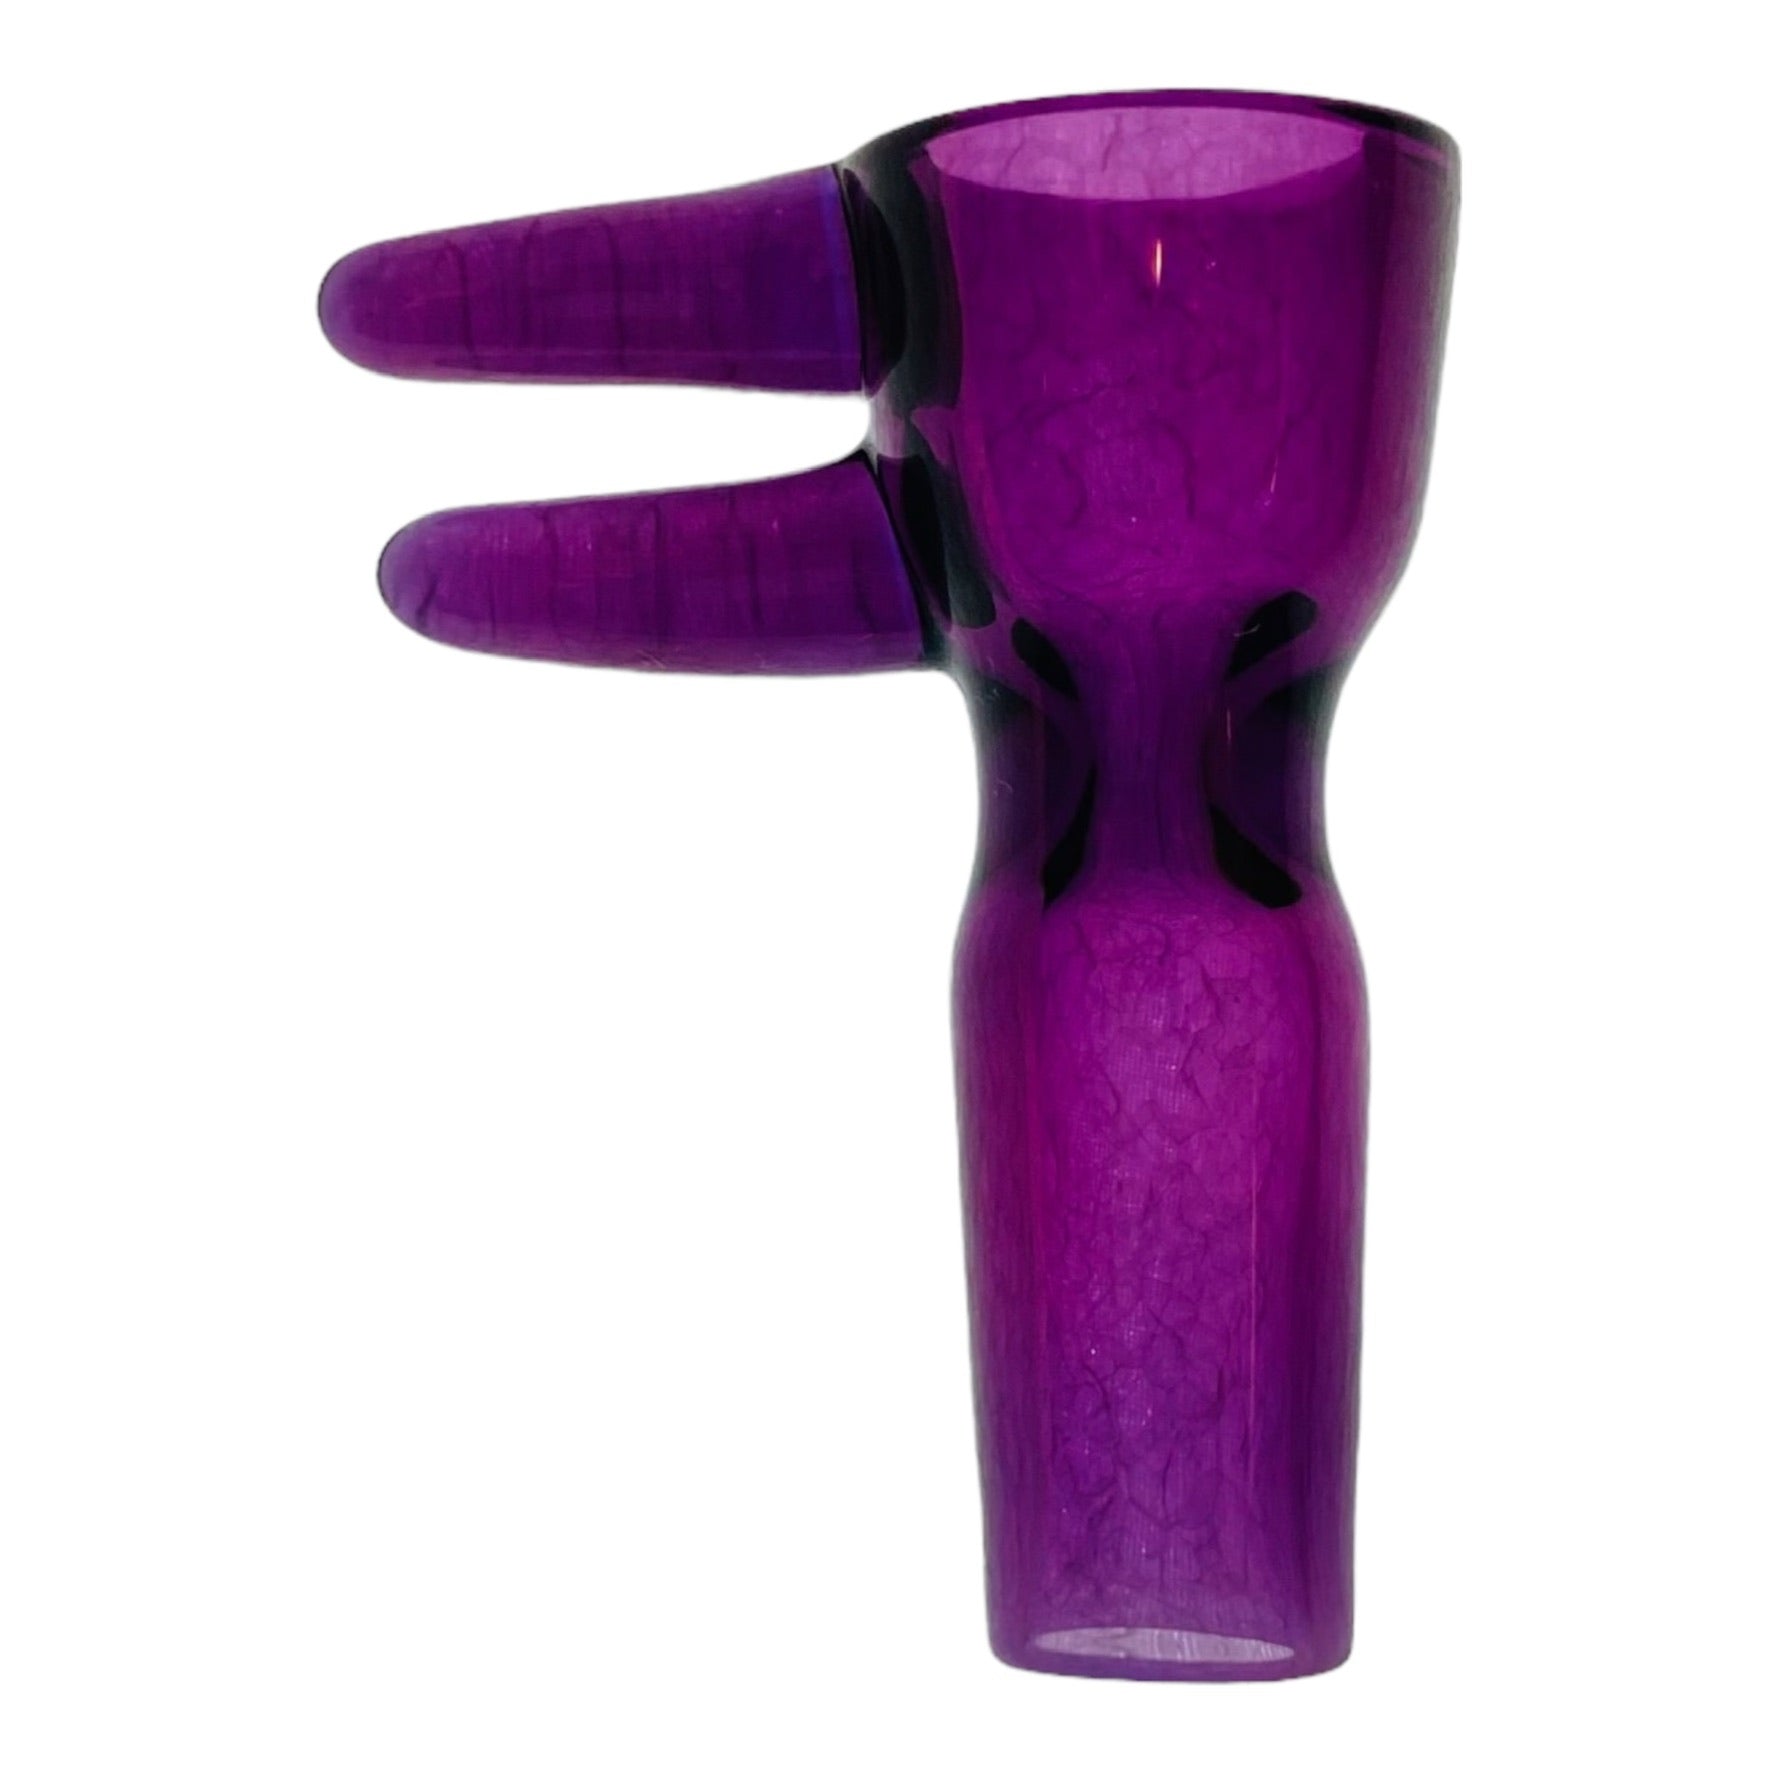 Optera Glass - Dark Purple With Purple Handle - 14mm Bowl Piece